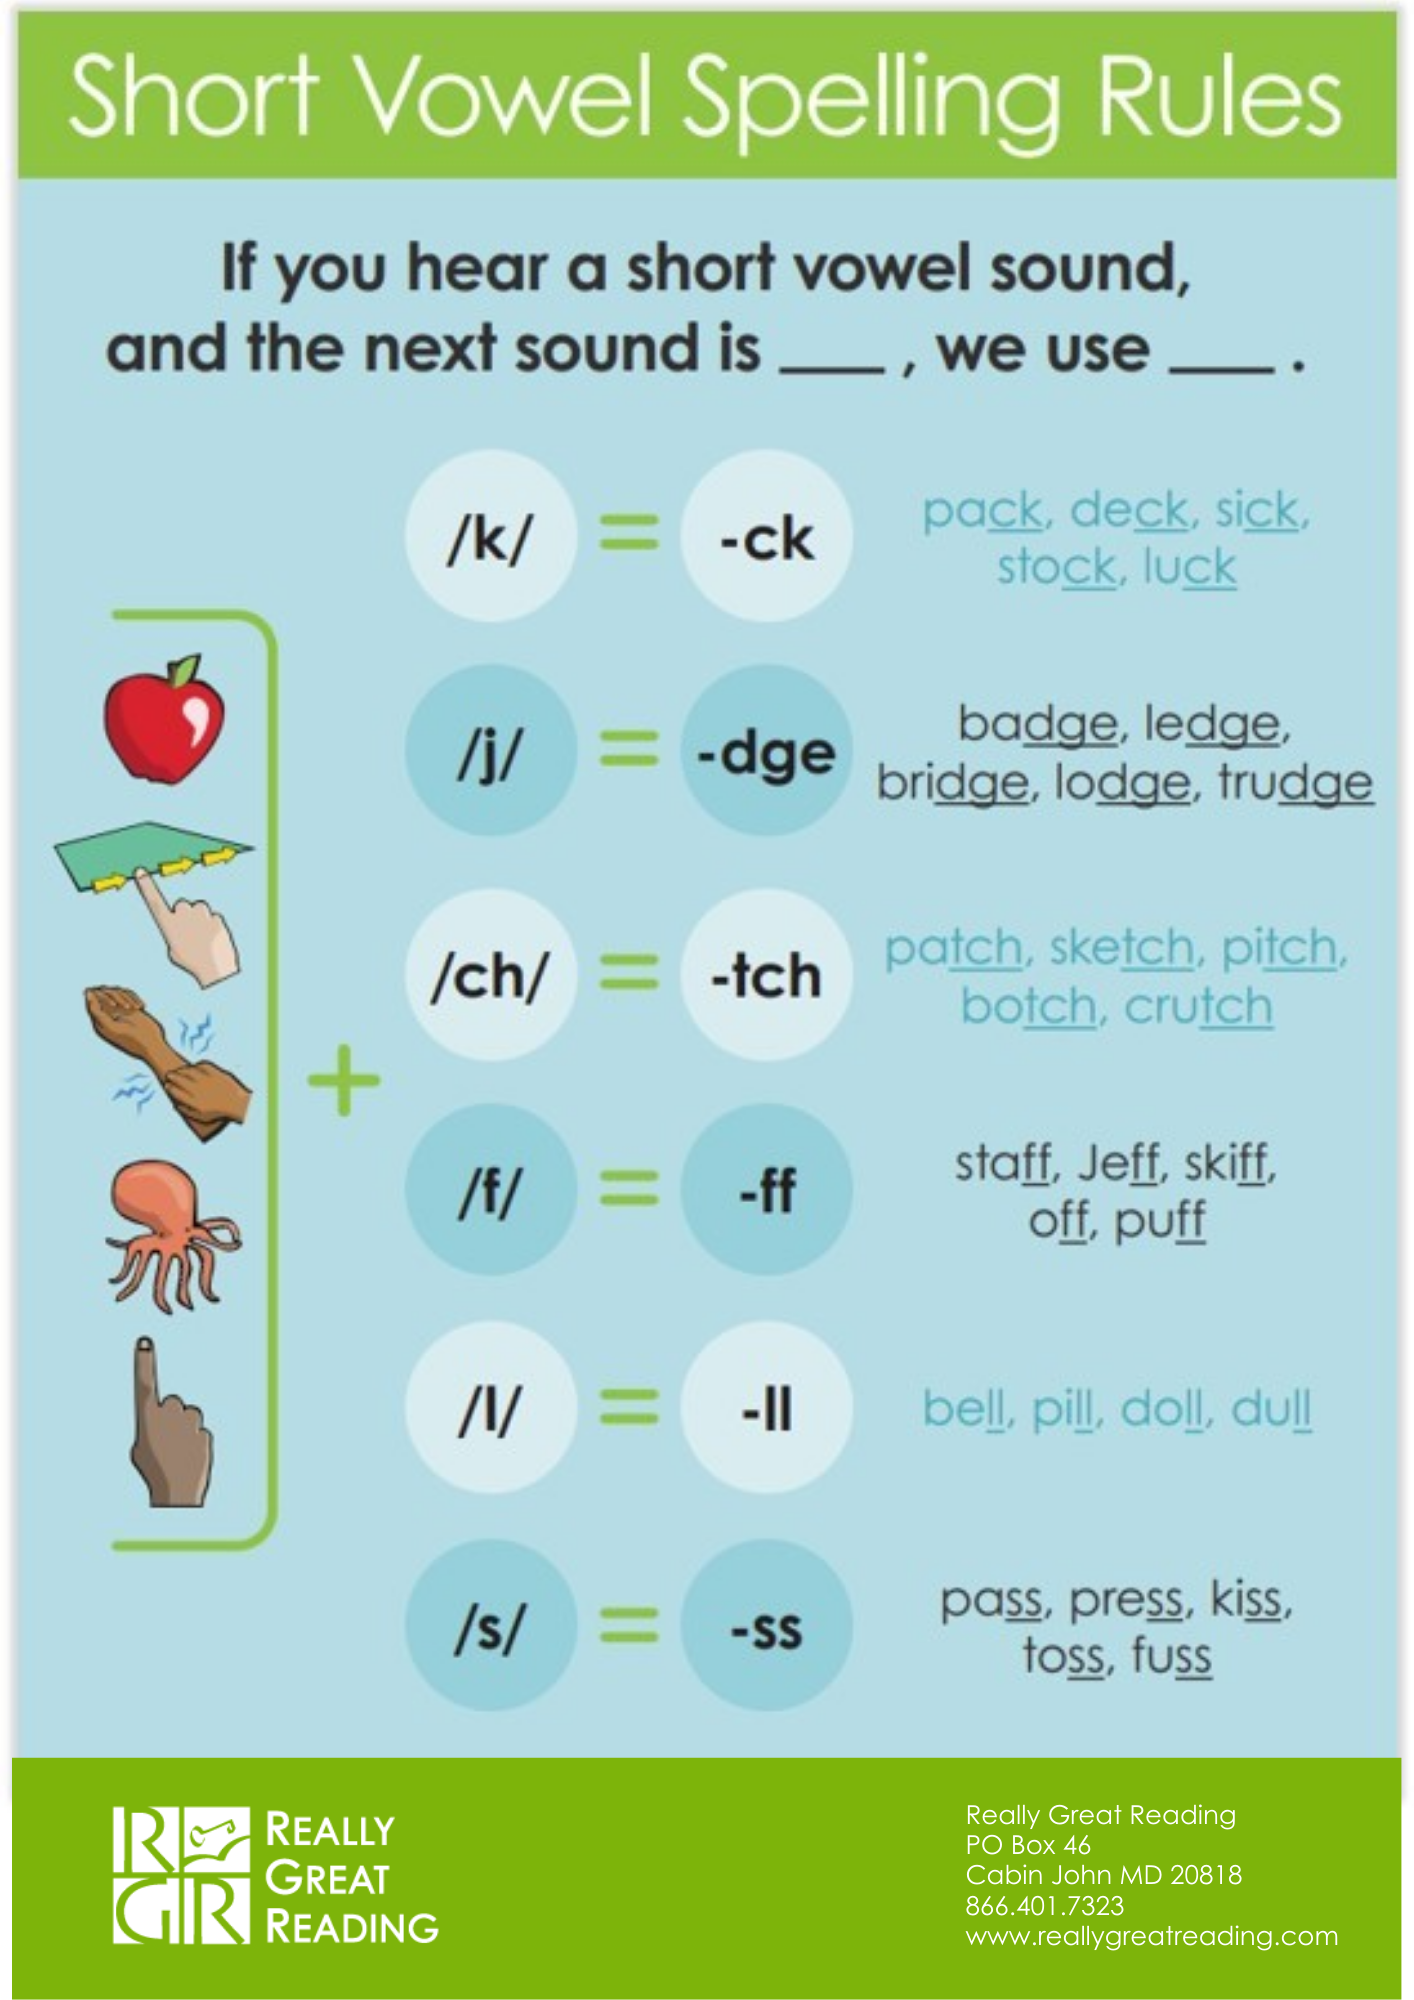 Single Consonant Spelling Rule Poster for Phonics Instruction